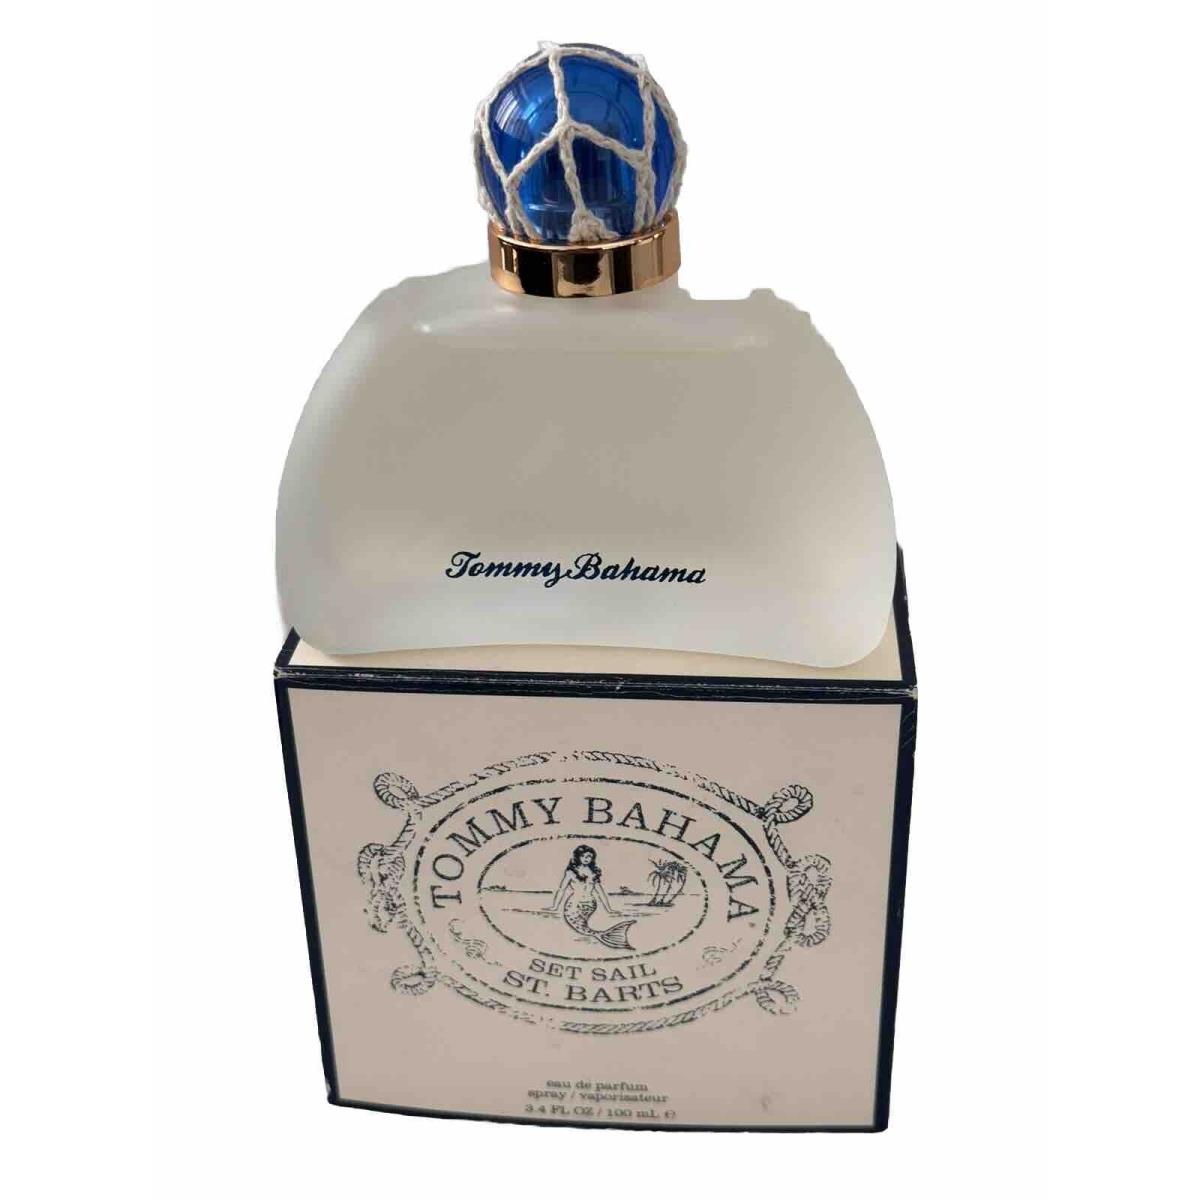 Tommy Bahama Set Sail St. Barts 3.4 oz Women`s Eau de Perfume Spray Rare -nib